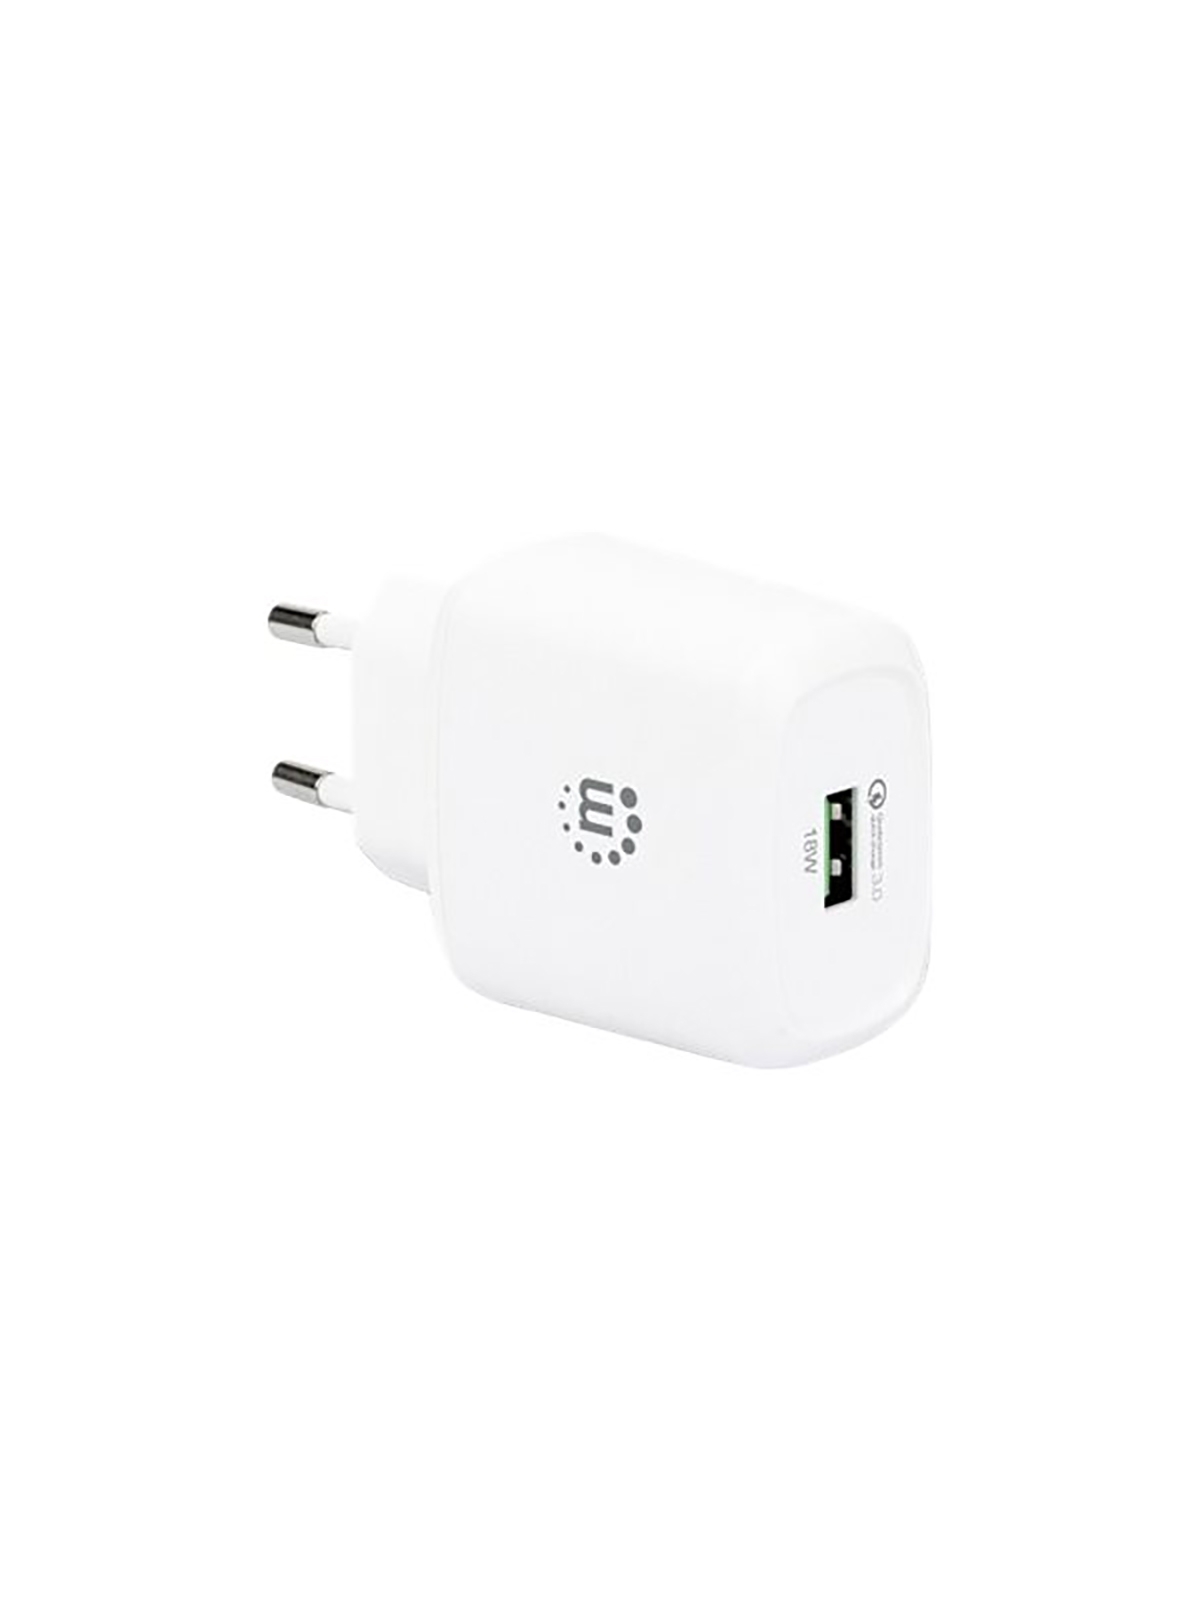 Manhattan QC 3.0 USB Charging Device (18 W) - USB